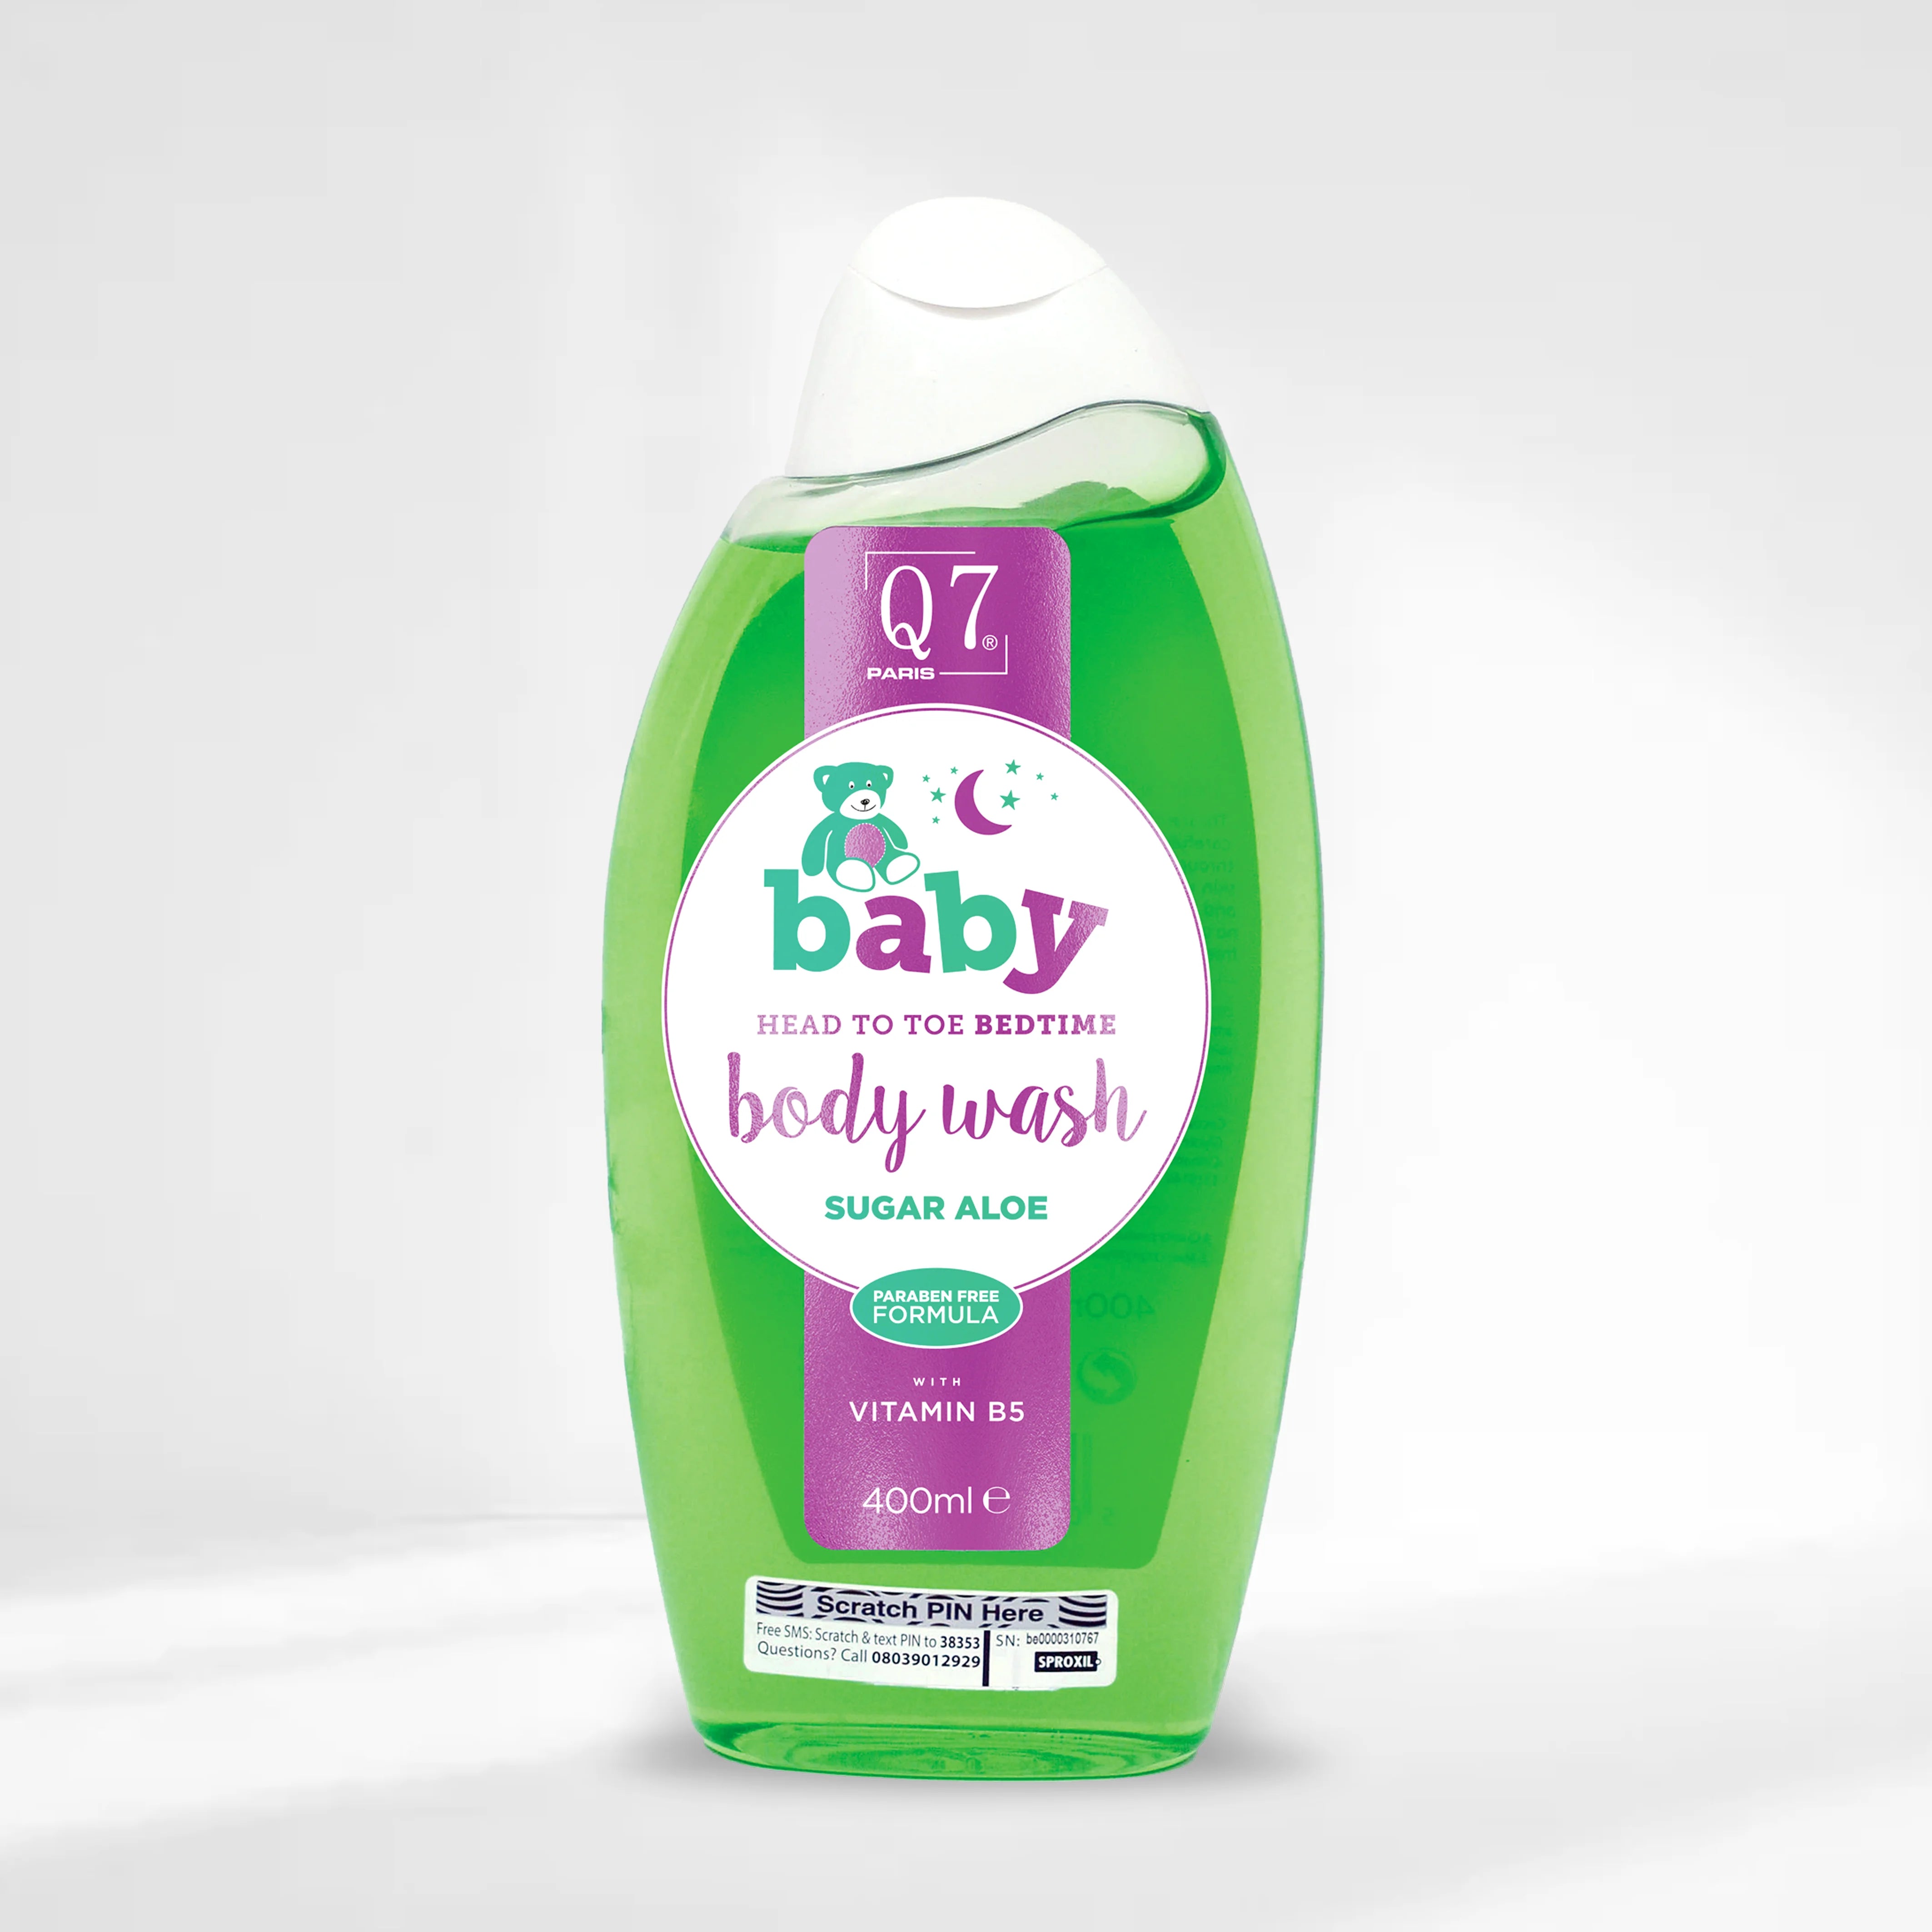 Q7-Baby Head To Toe BEDTIME Bodywash ('Sugar Aloe'): with Vitamin B5 - 400ml